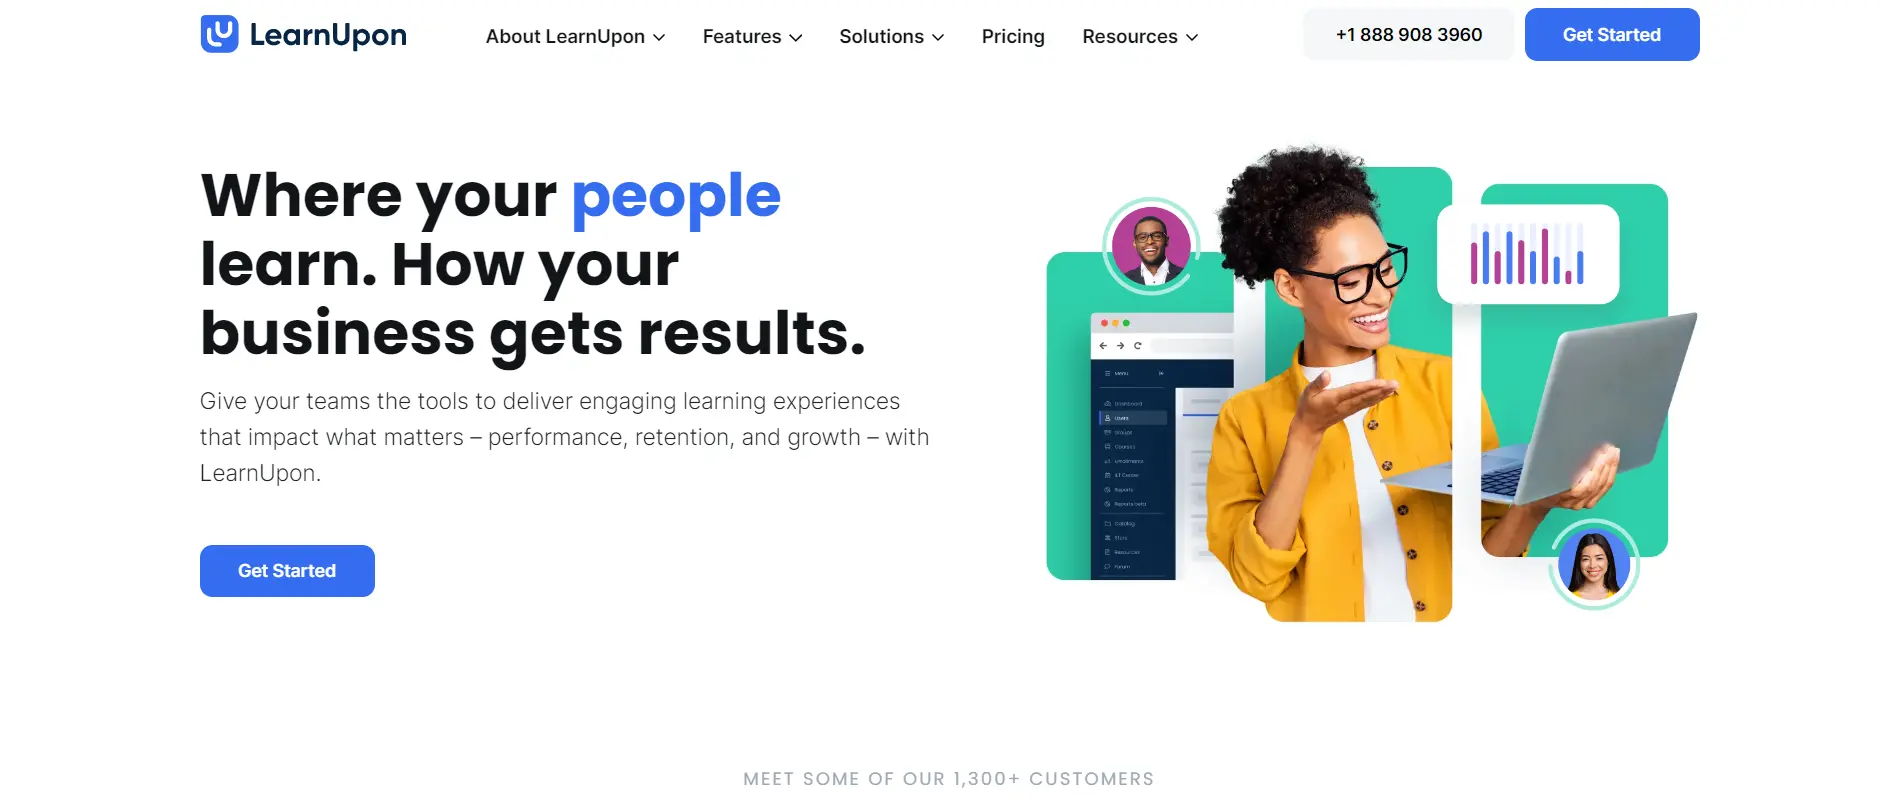 LearnUpon marketing website